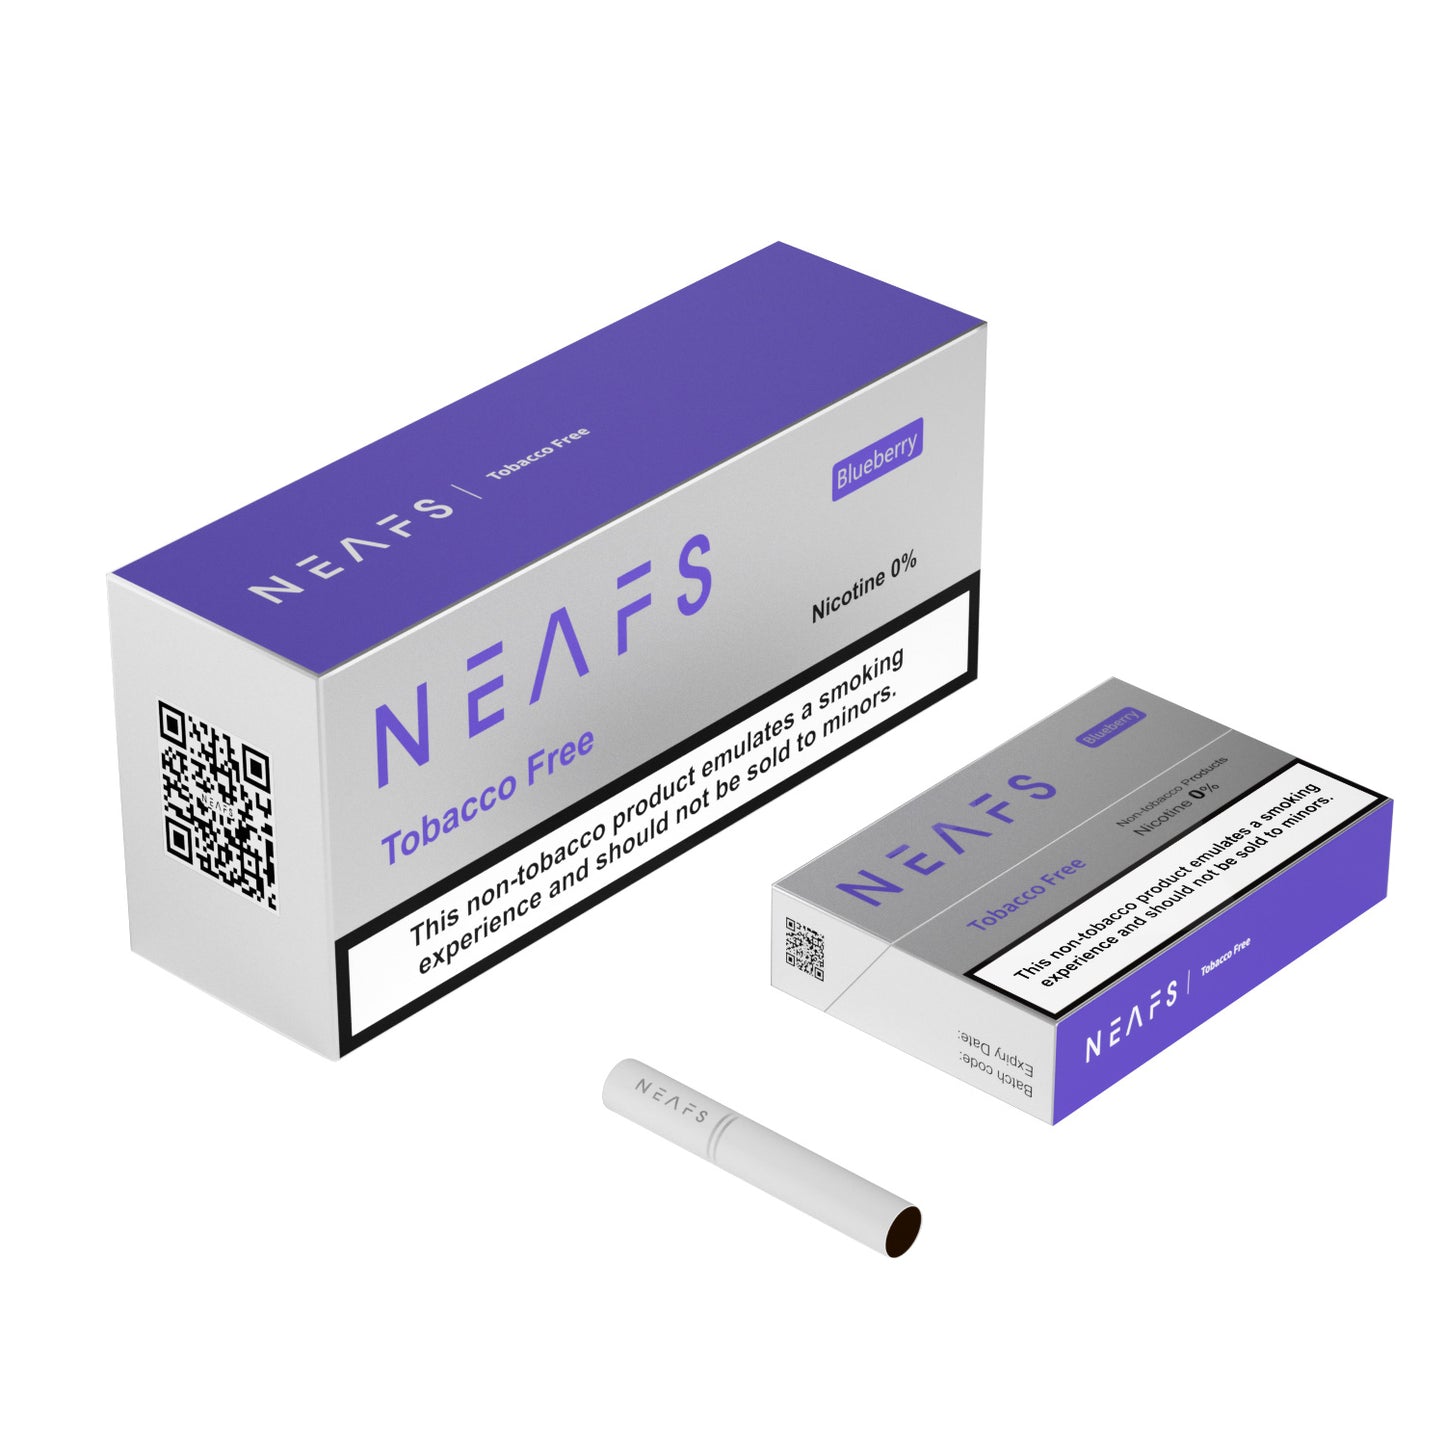 NEAFS Blueberry Tobacco Free Heated Sticks